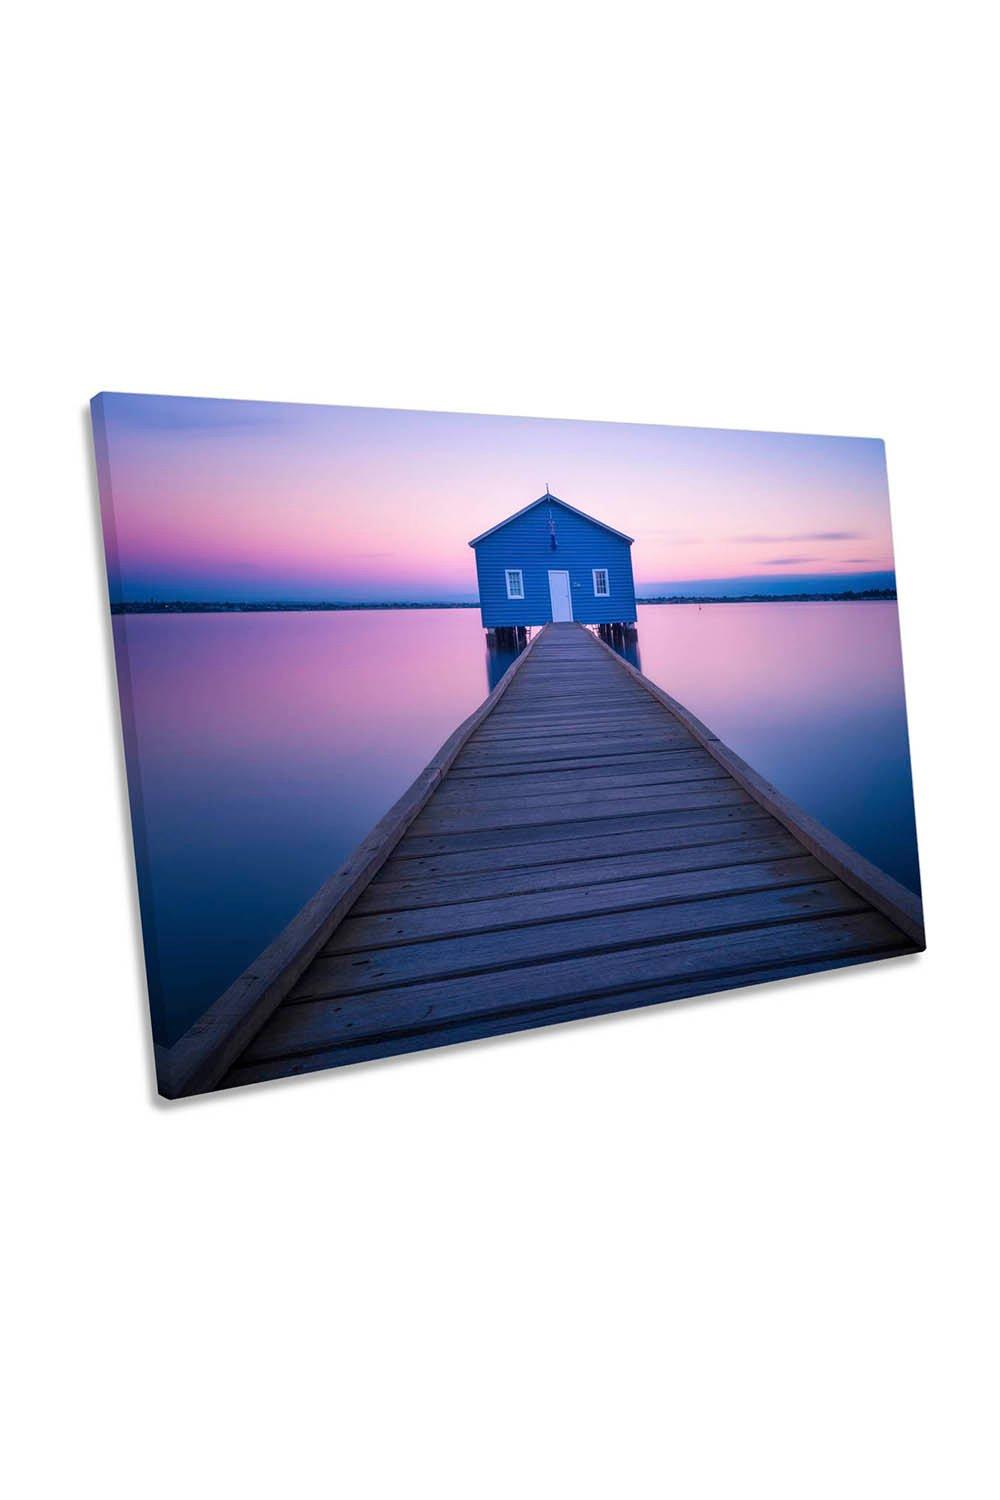 Boathouse Pink Sunset Lake Jetty Canvas Wall Art Picture Print